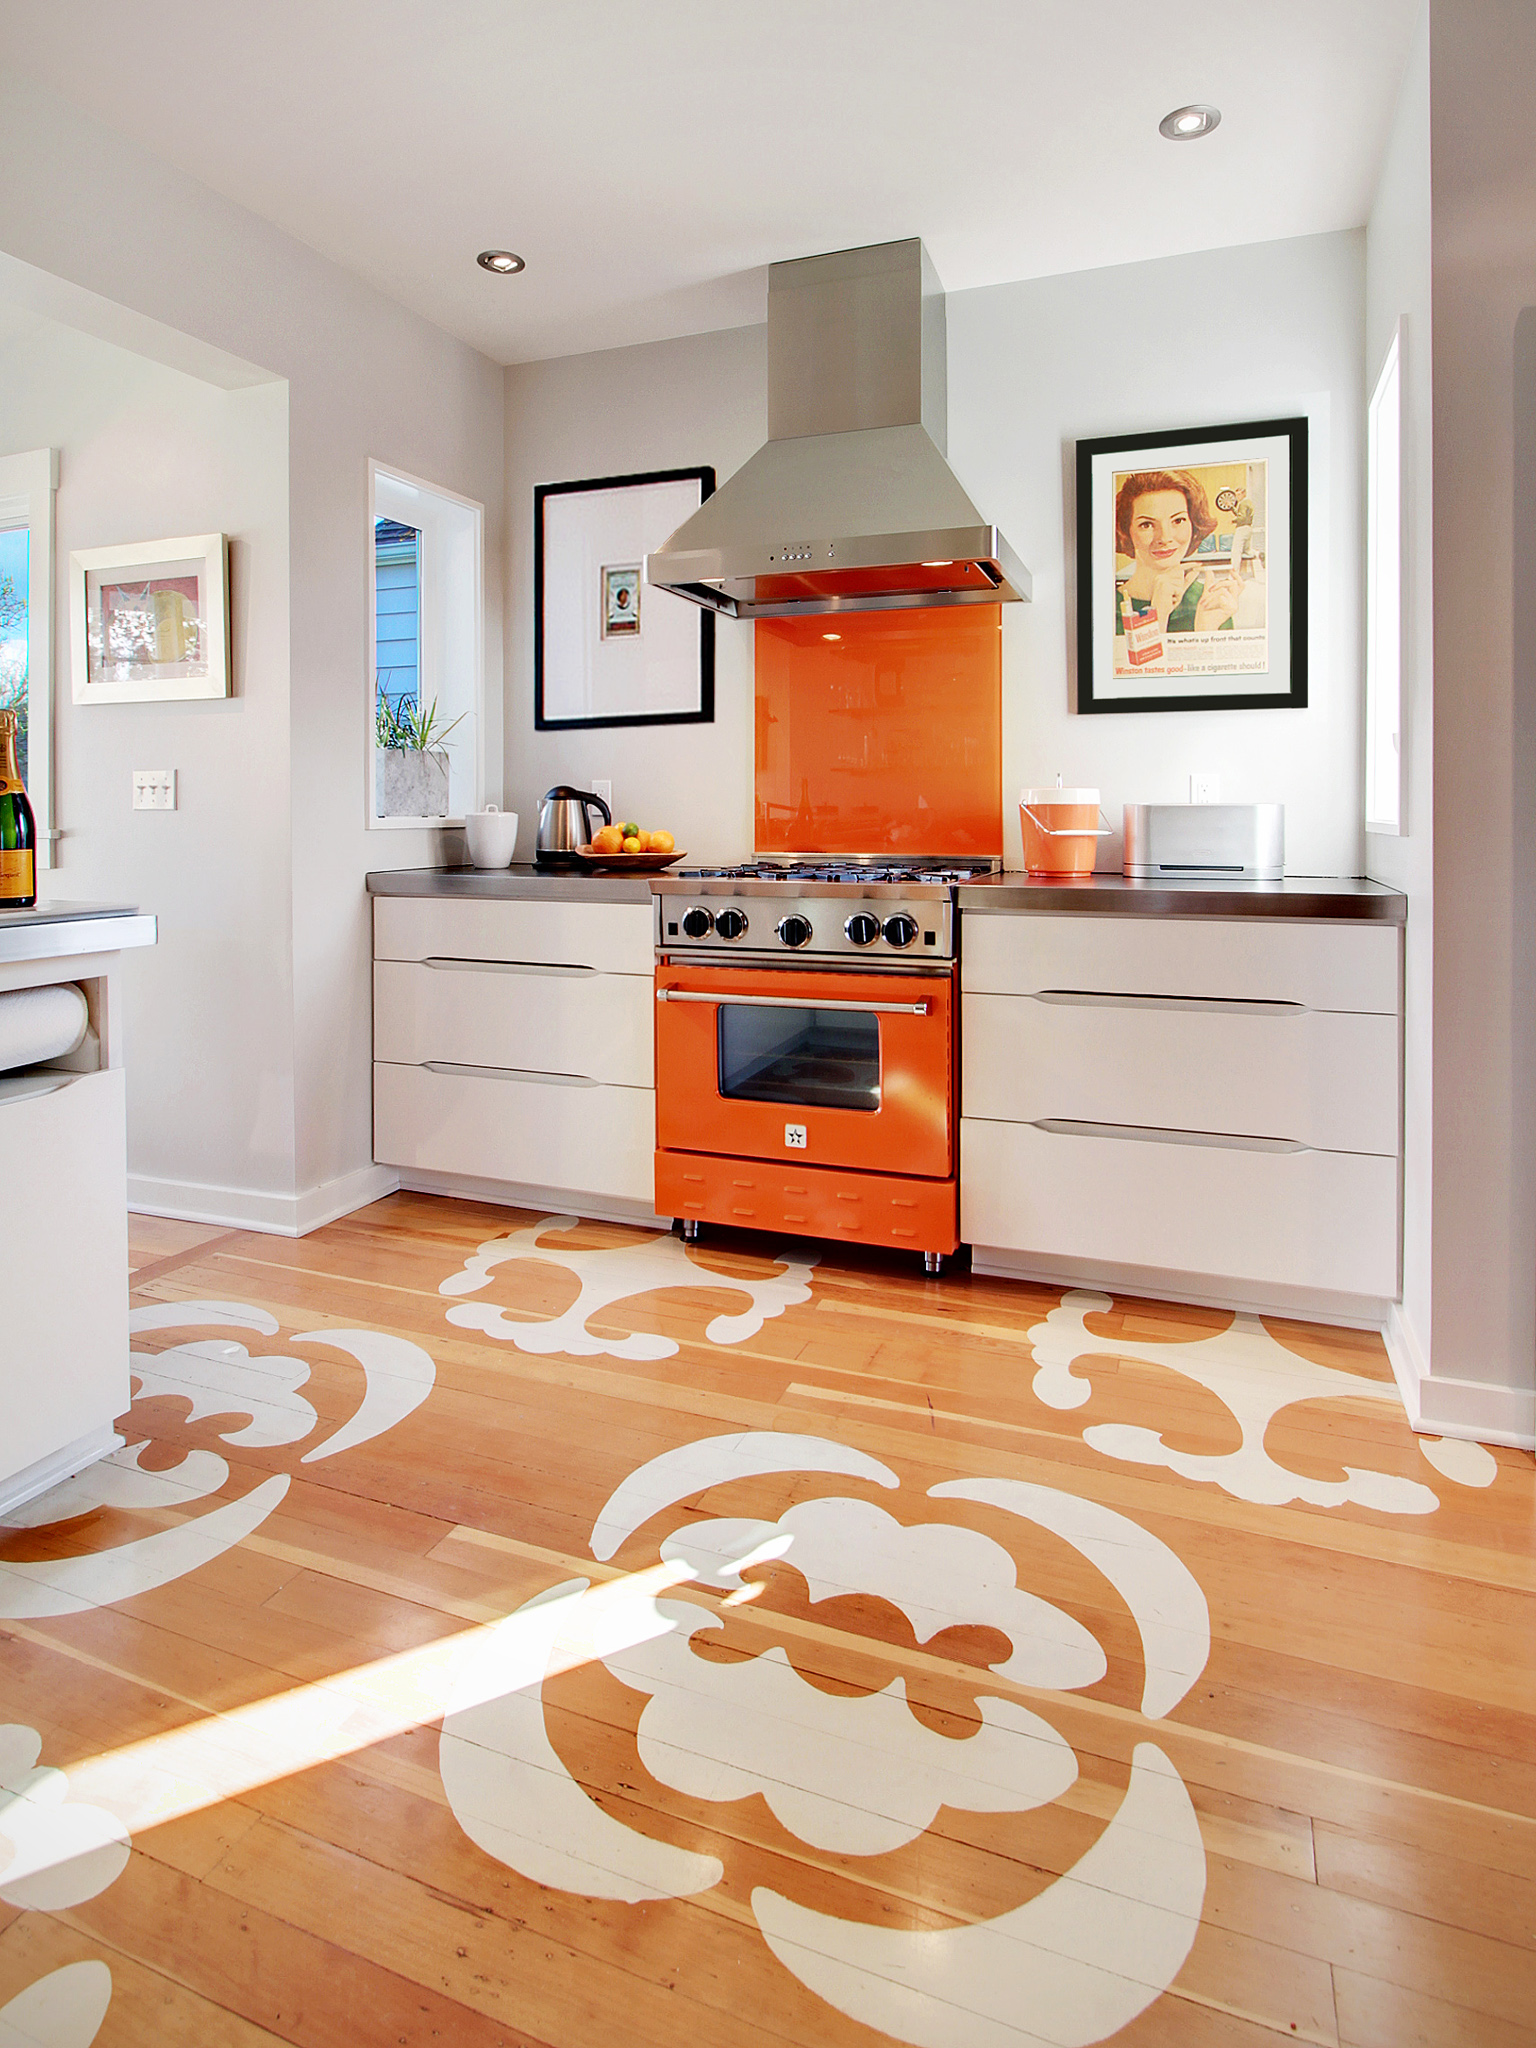 ORANGE Vinyl Dolls House Kitchen Floor Tiles 